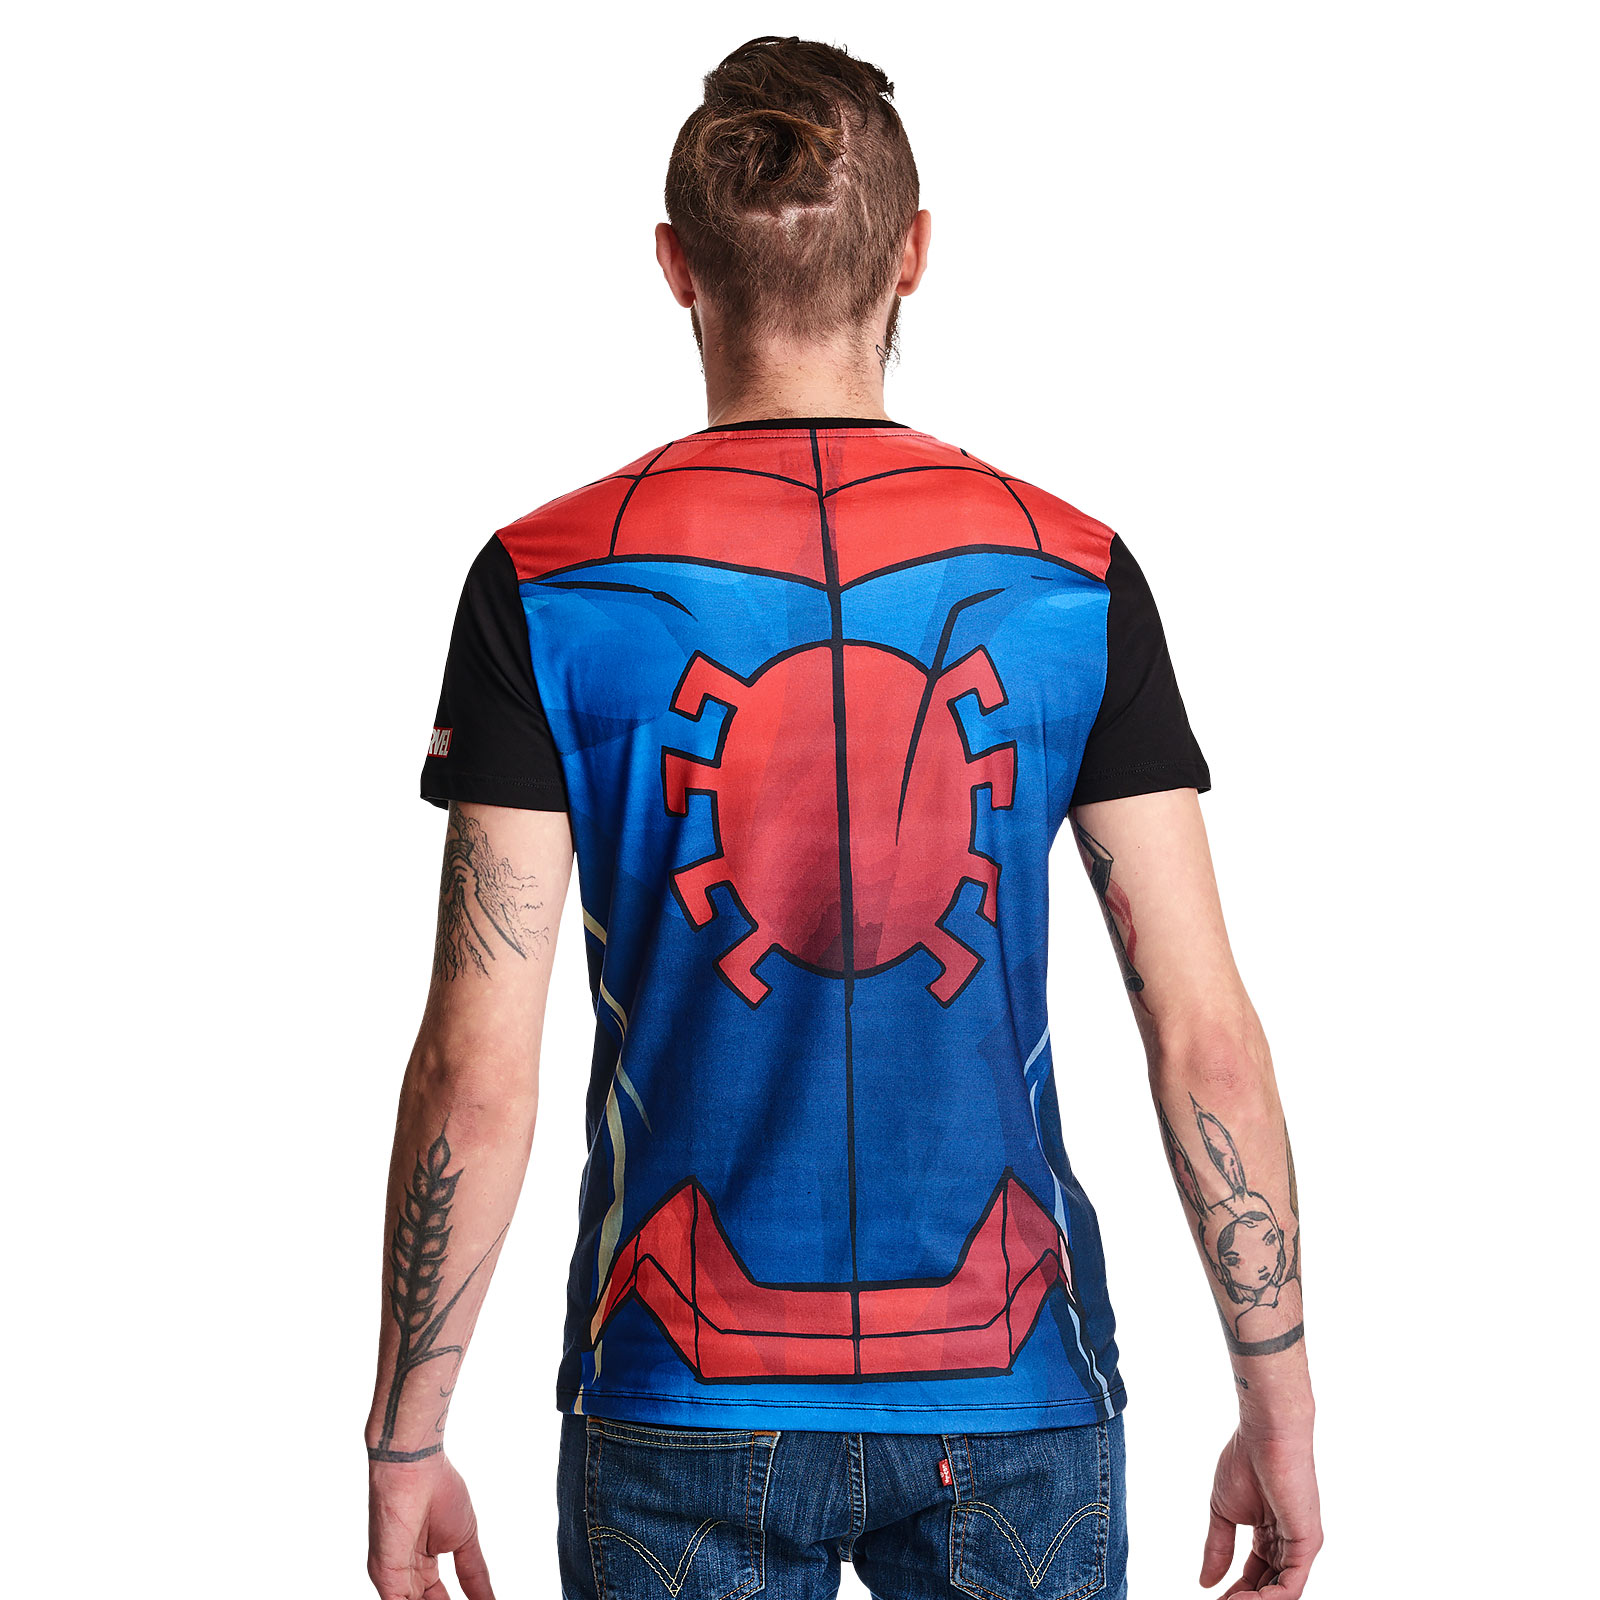 Spider-Man - Lookalike T-Shirt